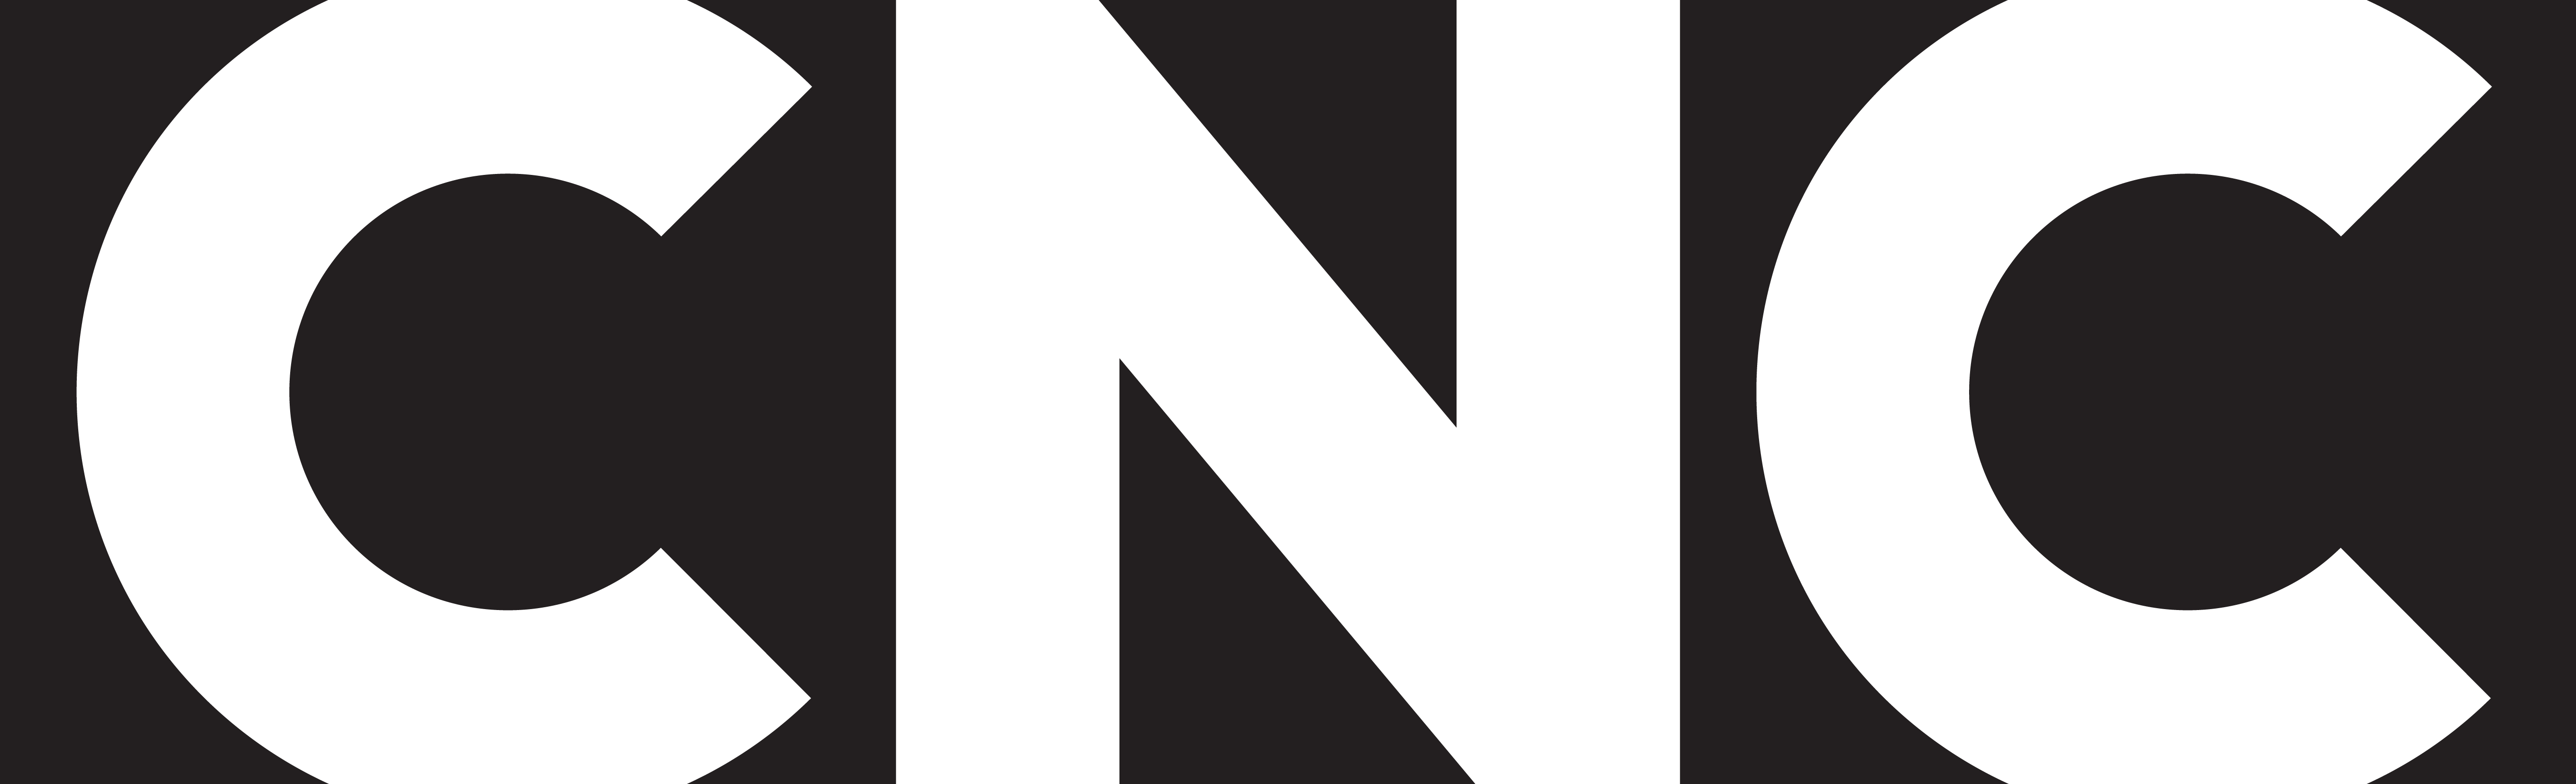 01-cnc-matrice-logo